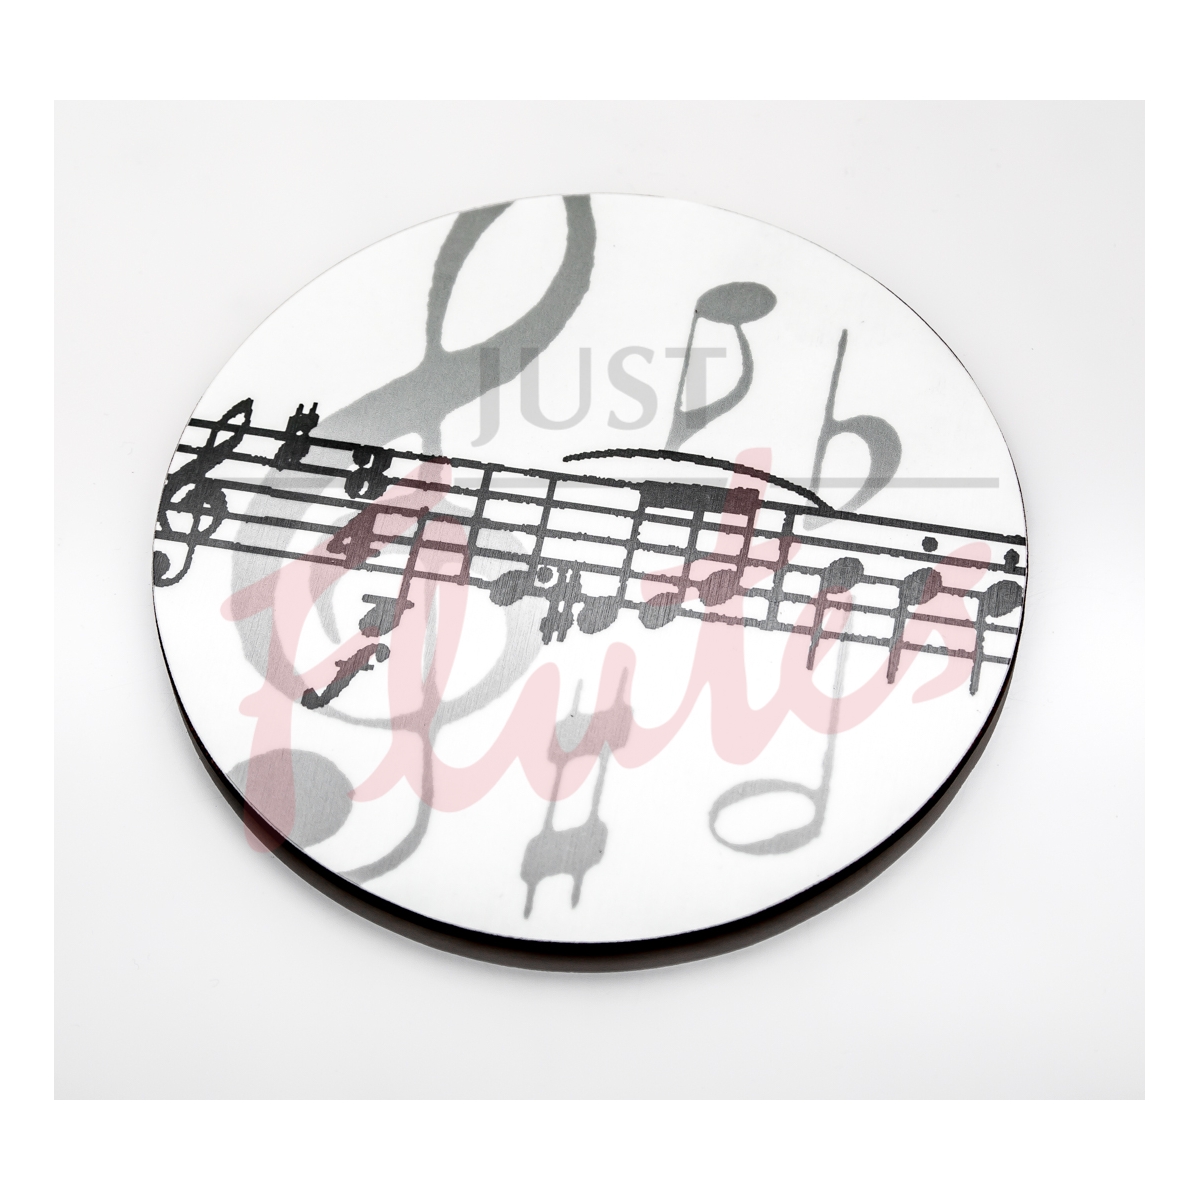 Music Mug Mats - White Music Note Design (Pack of 2)